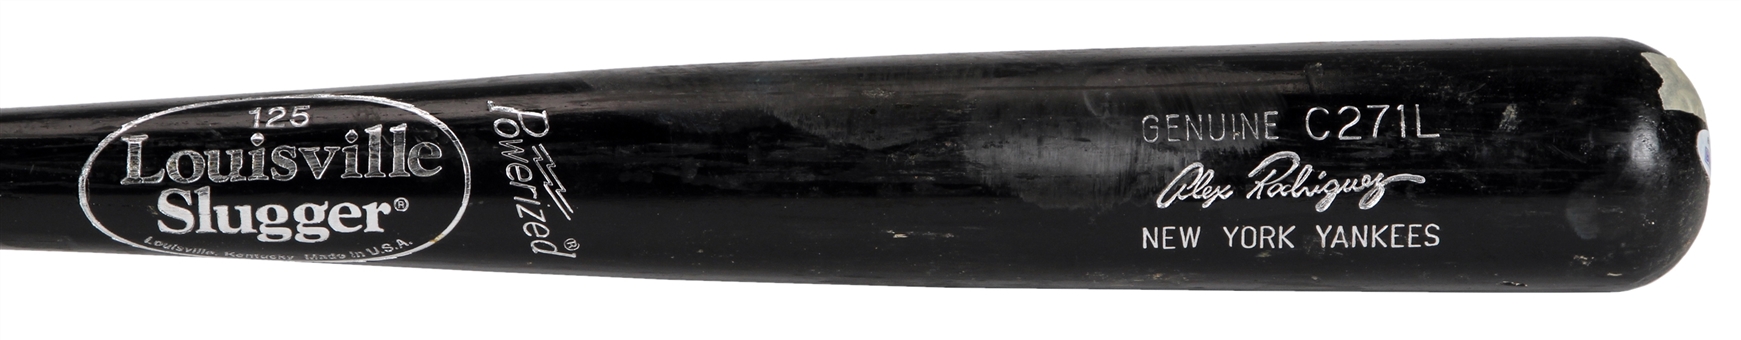 2011 Alex Rodriguez Game Used Louisville Slugger C271L Bat (PSA/DNA GU 8.5)